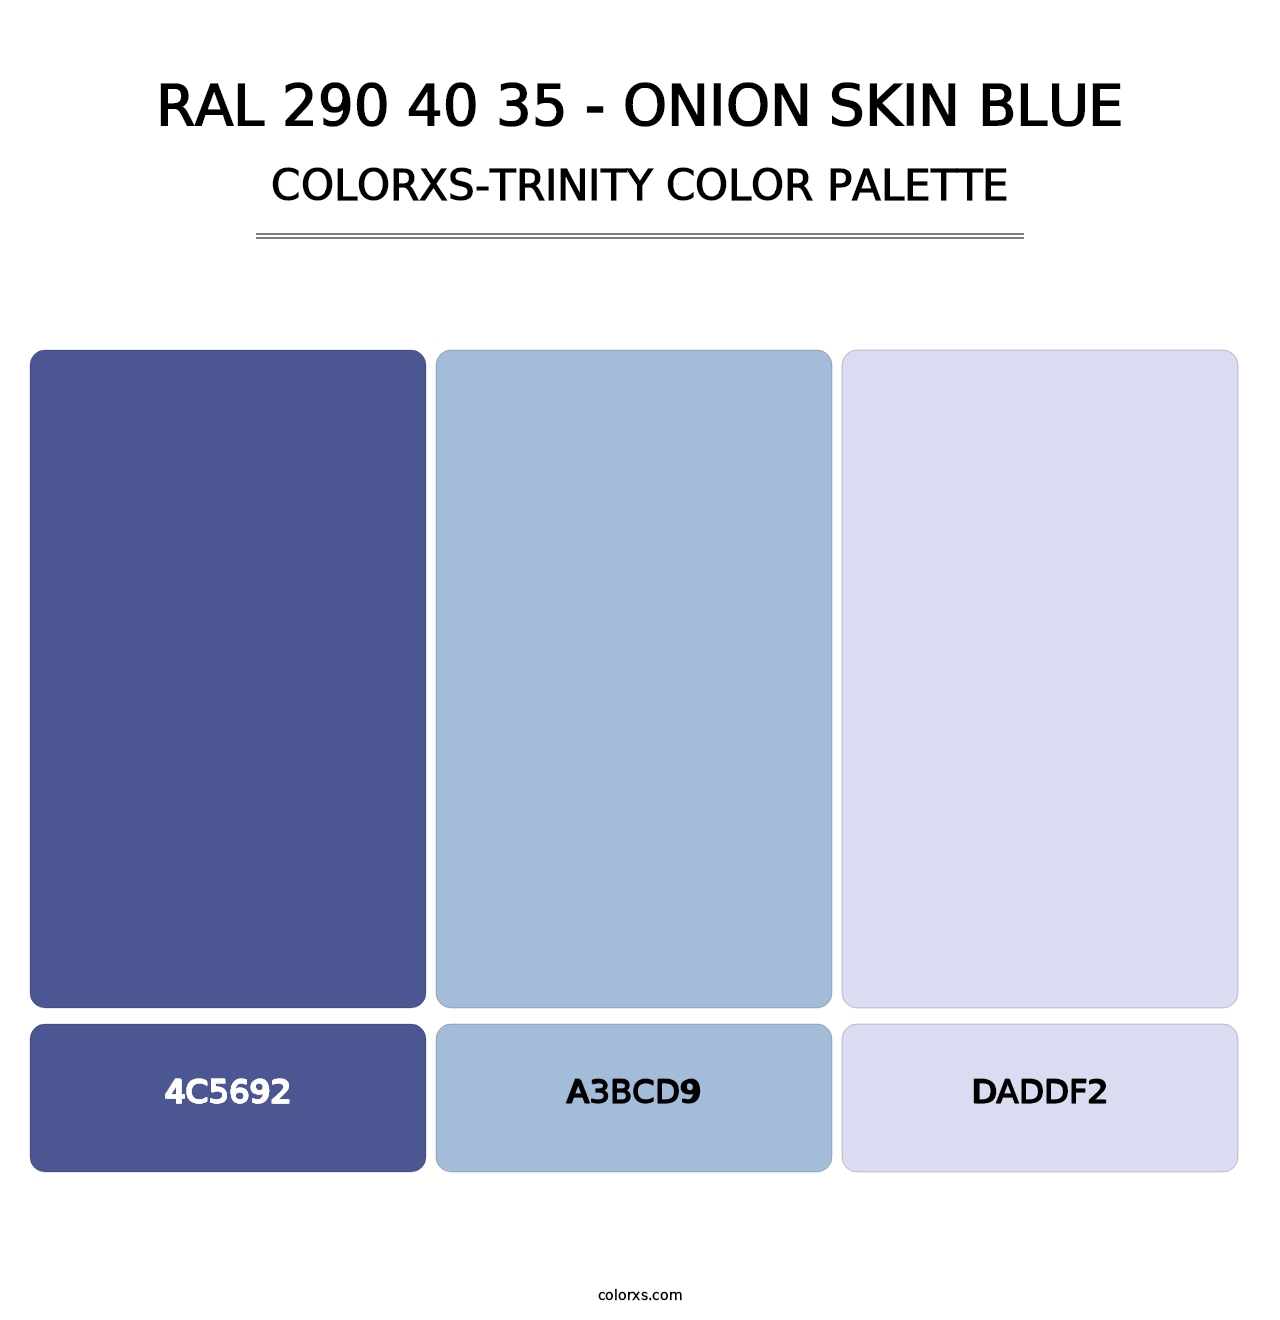 RAL 290 40 35 - Onion Skin Blue - Colorxs Trinity Palette